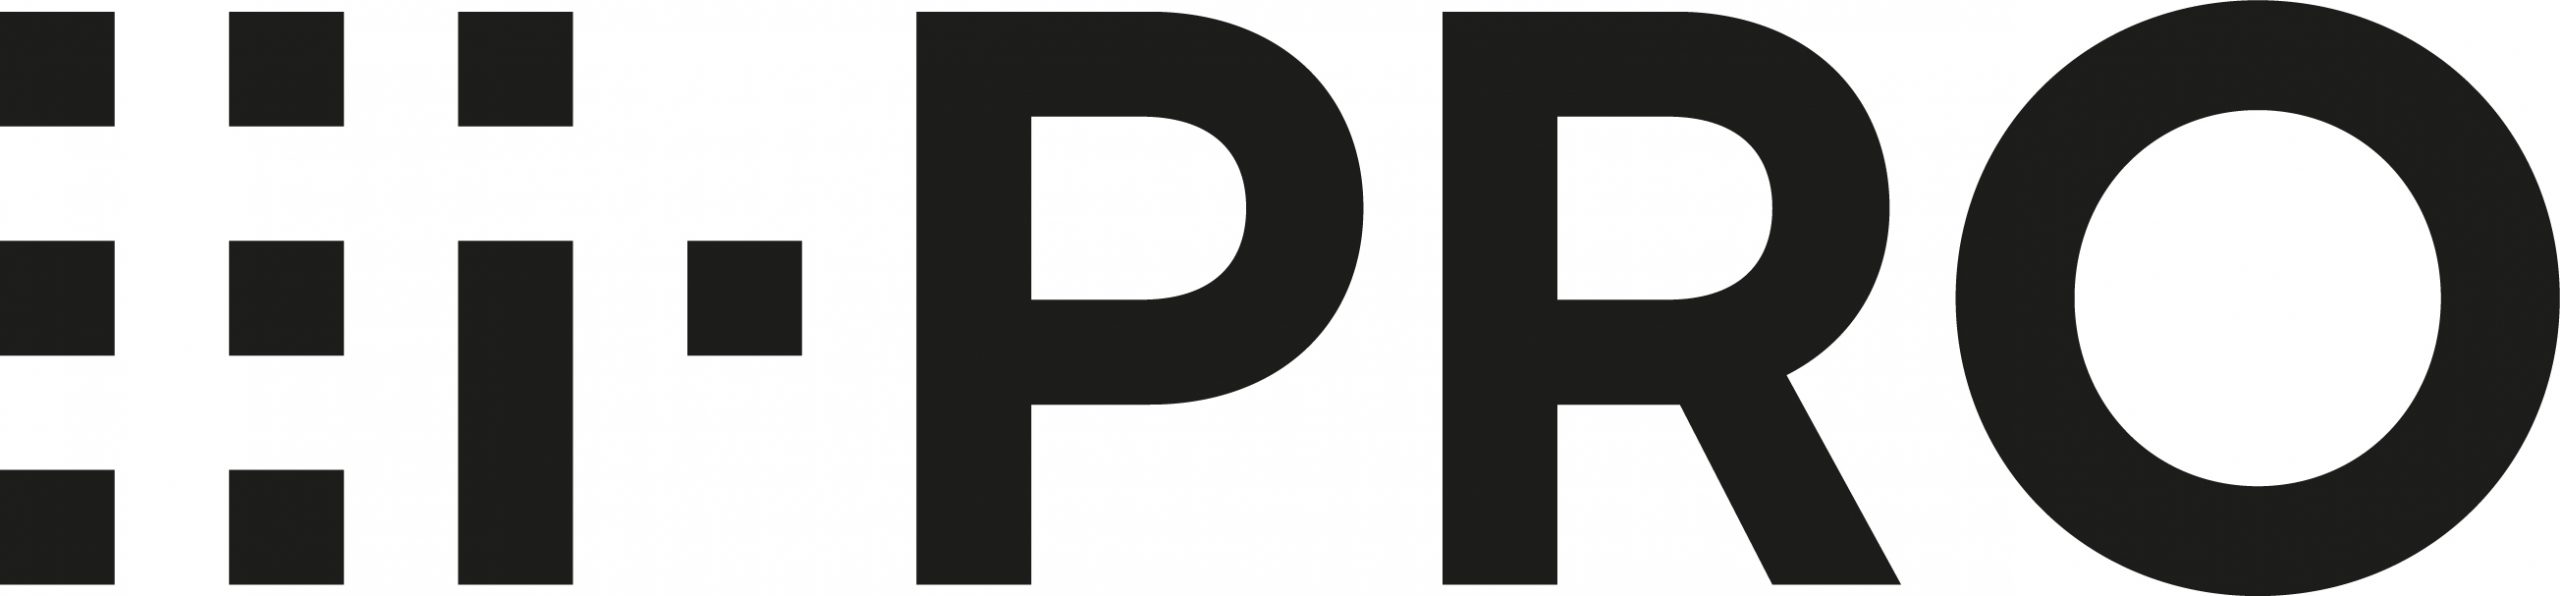 Panasonic I-pro security camera logo